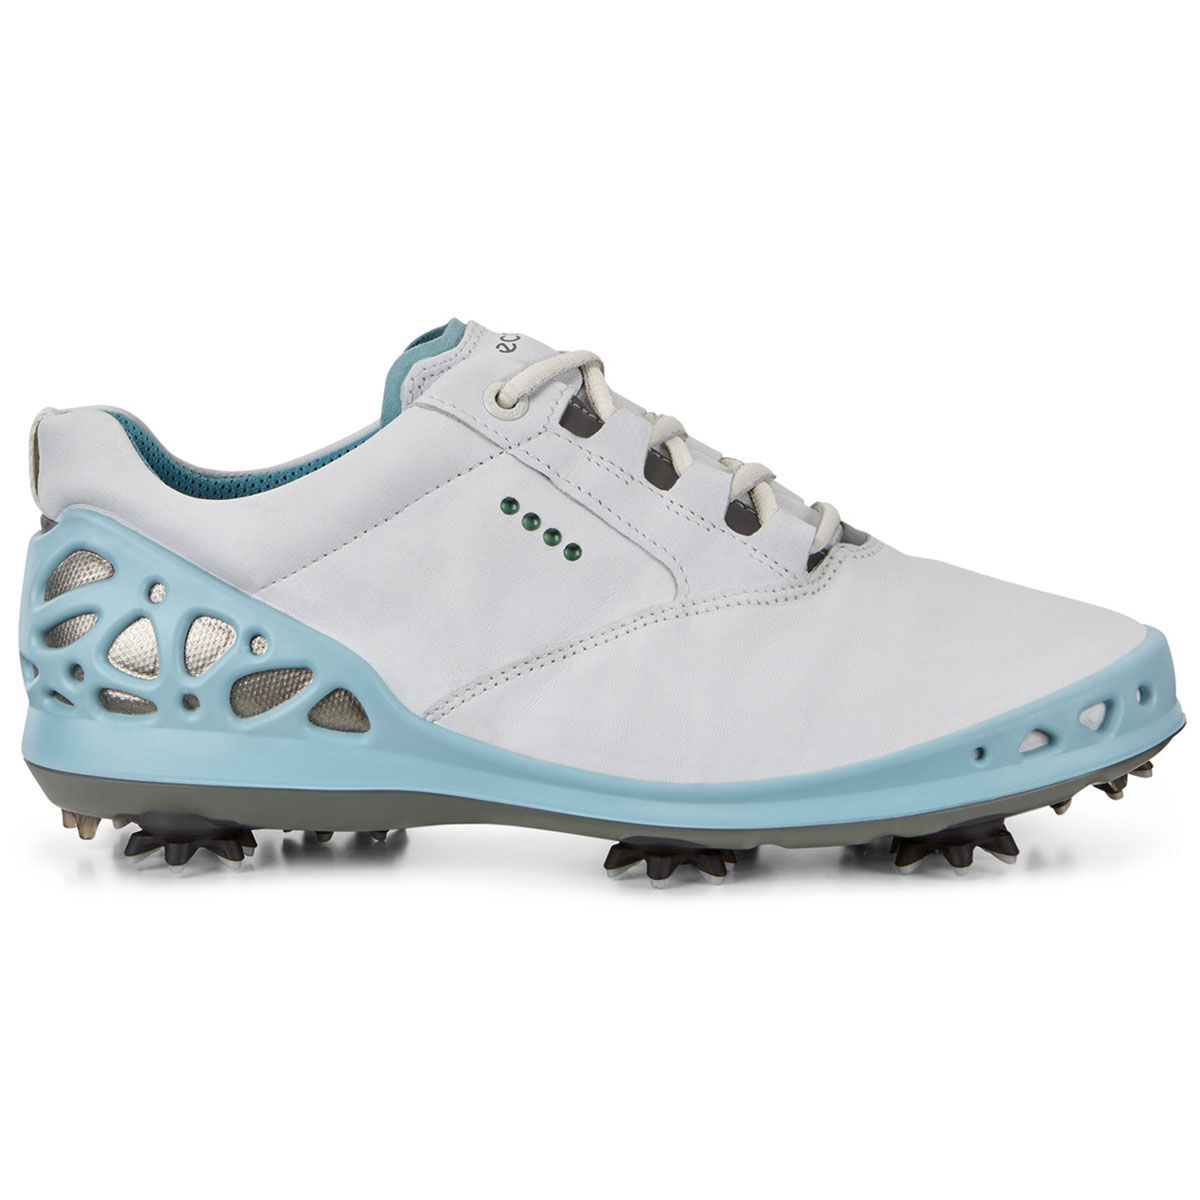 Chaussures ECCO Golf Cage Pour Femmes, femme, 2, White/aqua, Normal | Online Golf